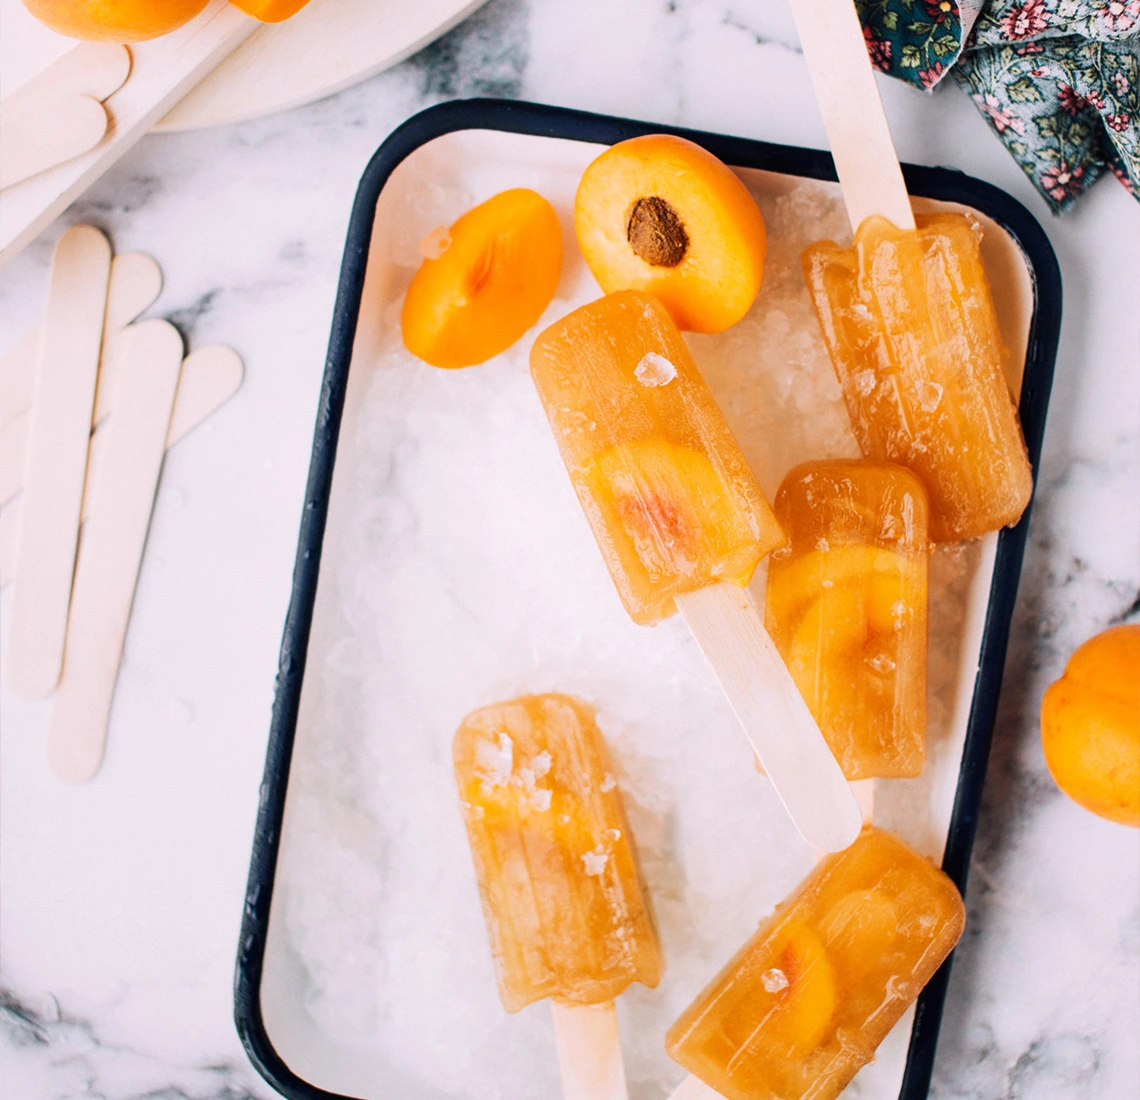 Summer drinks prepared with papaya and orange